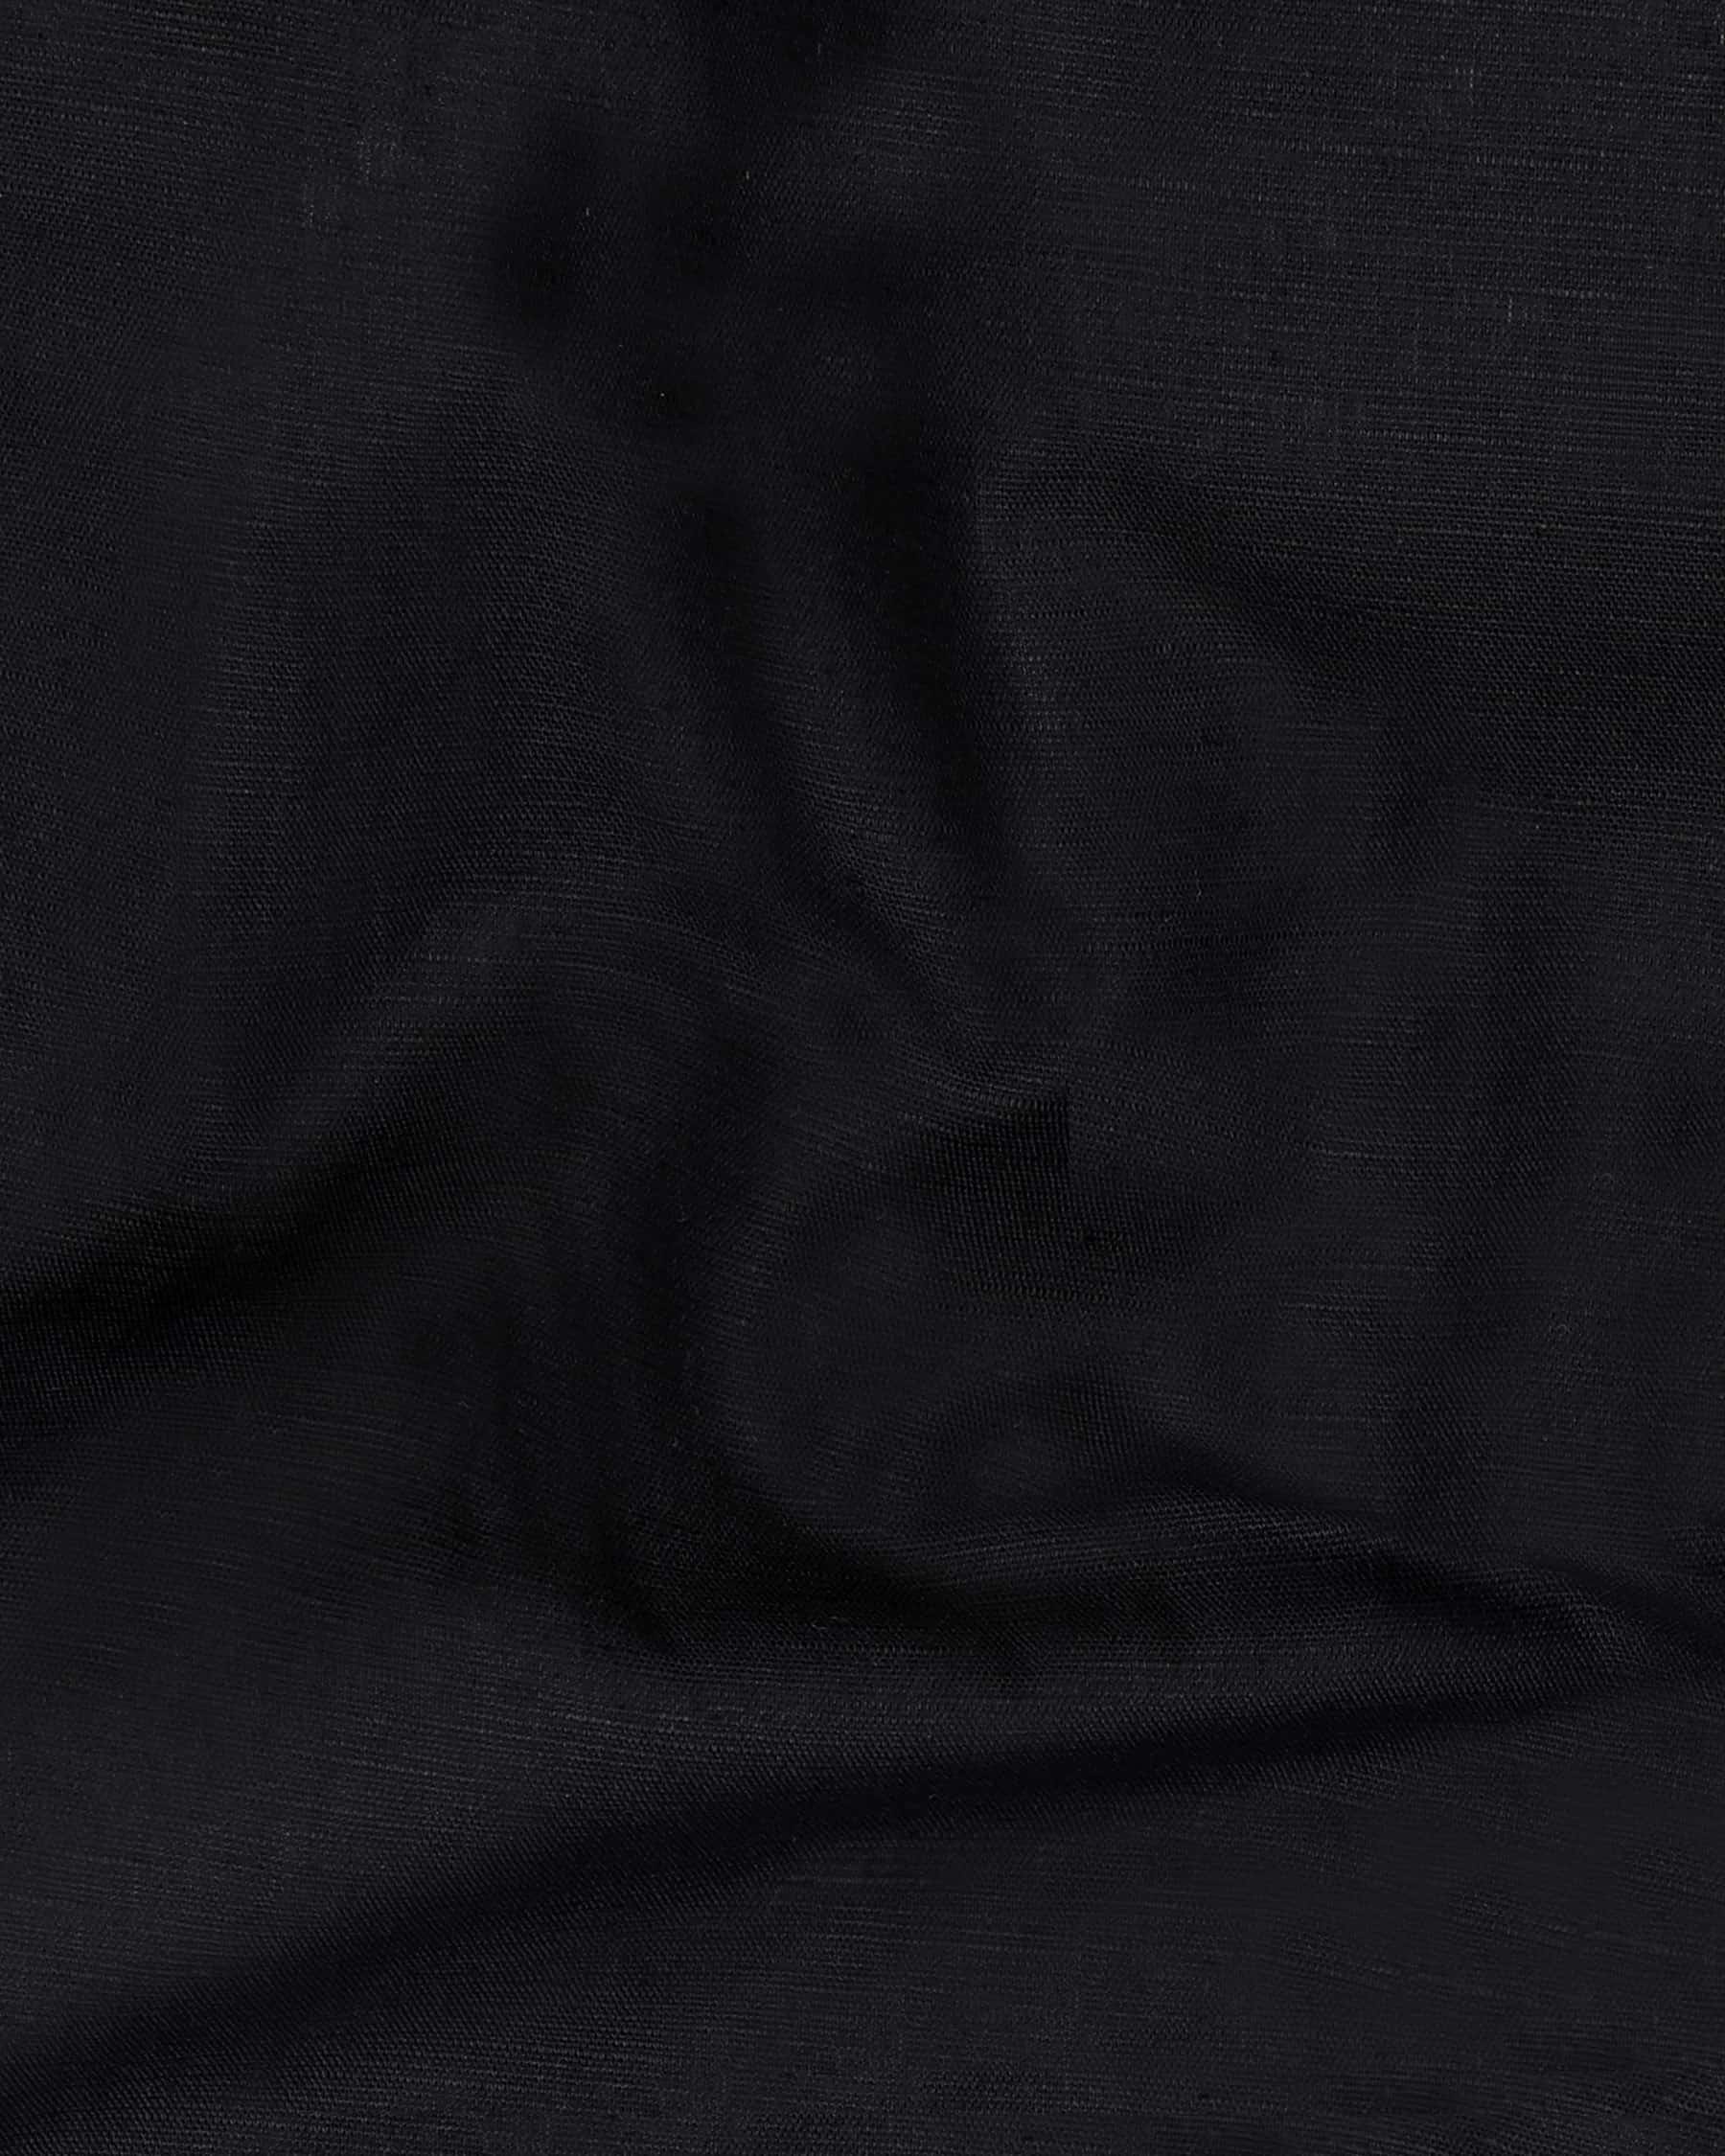 Jade Black Rice stitched Luxurious Linen Shirt